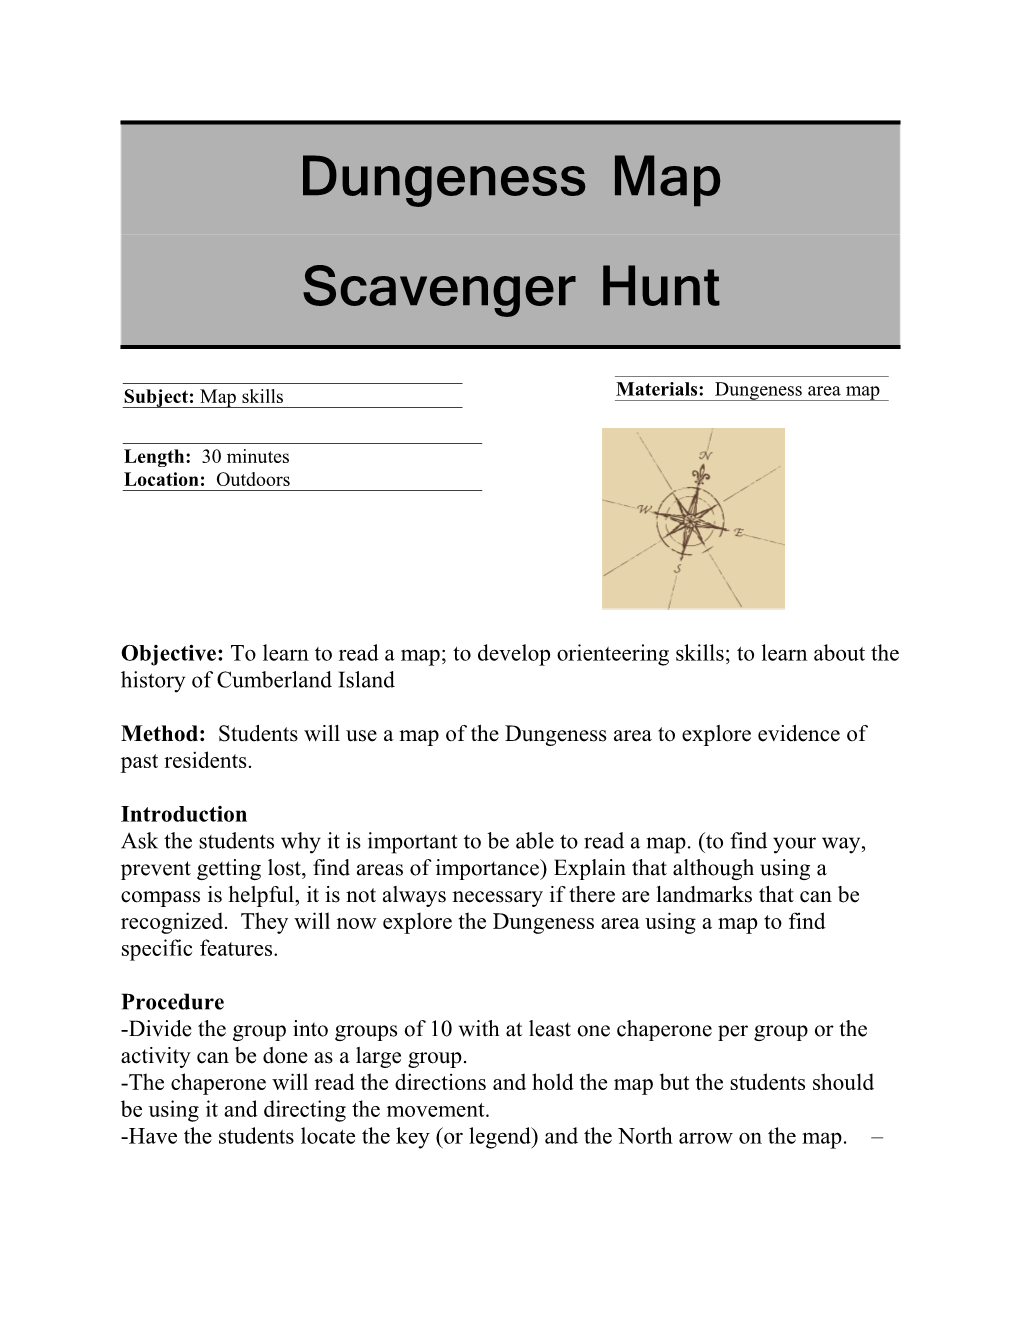 Dungeness Map Scavenger Hunt